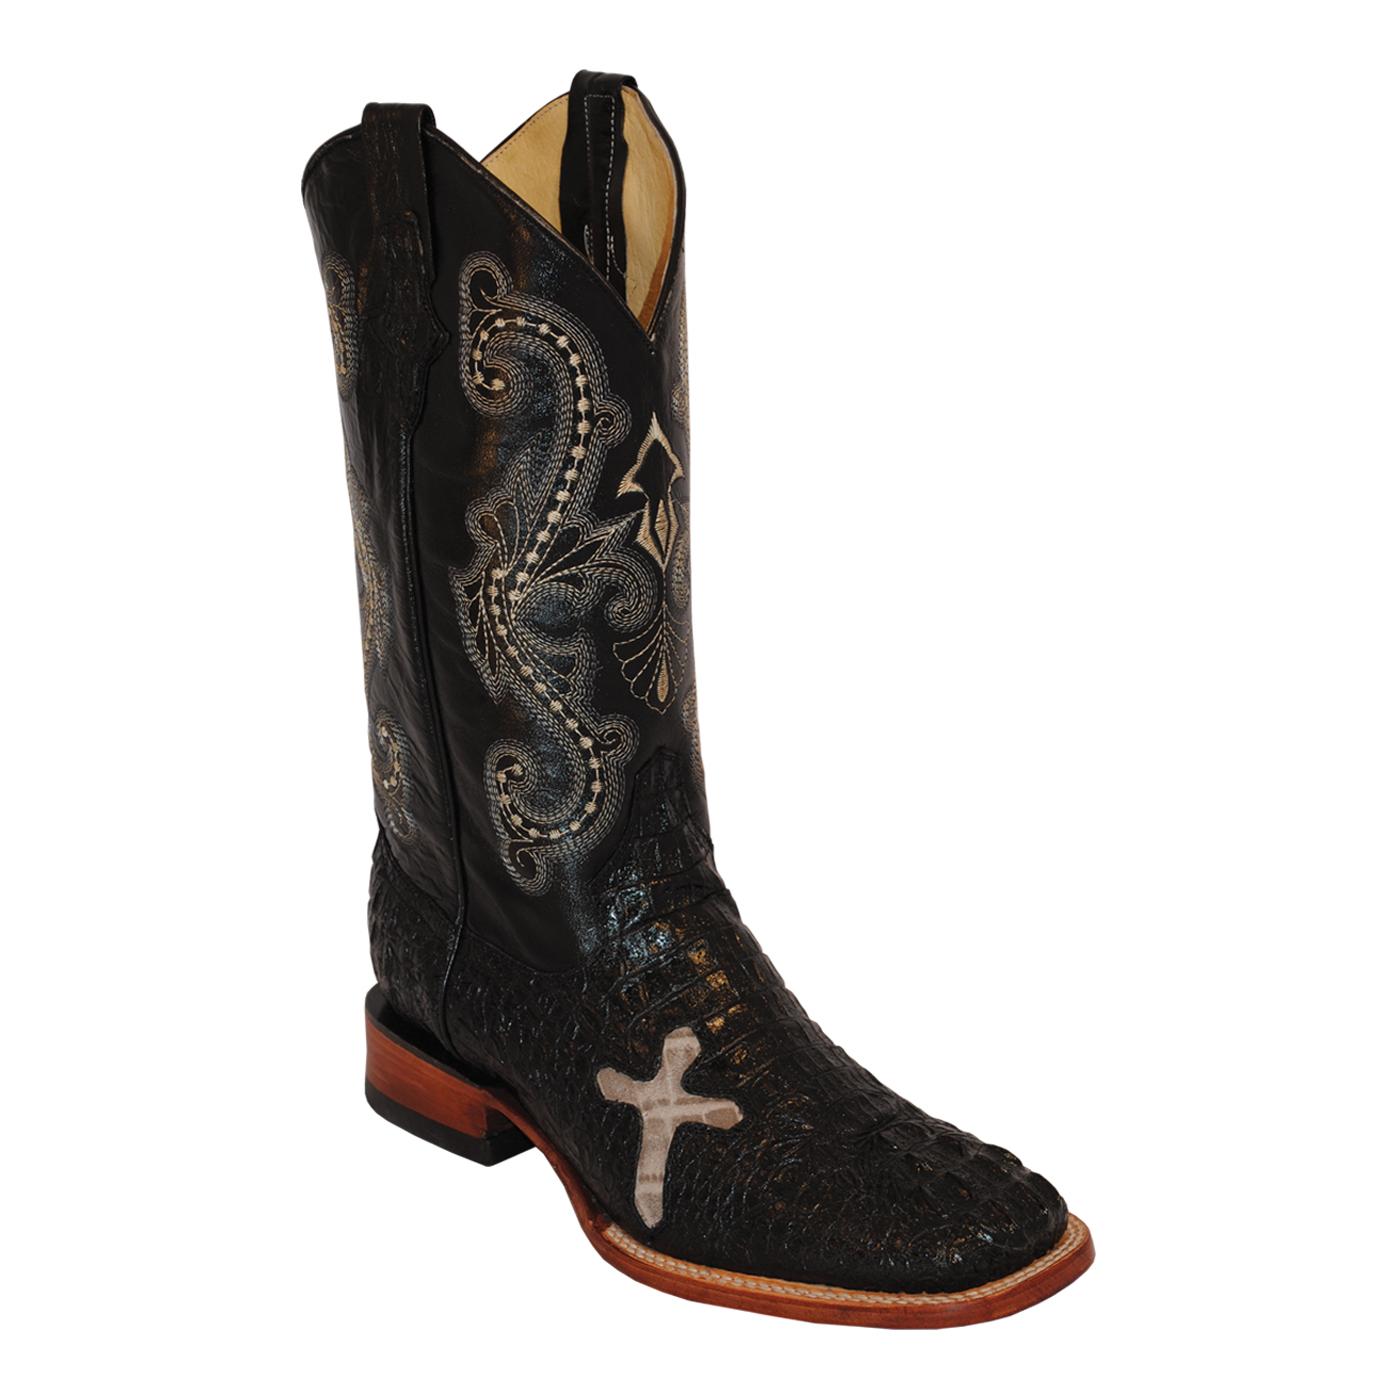 Ferrini 40393-06 Black Caiman Cross Print Boots - $219.90 :: Upscale ...